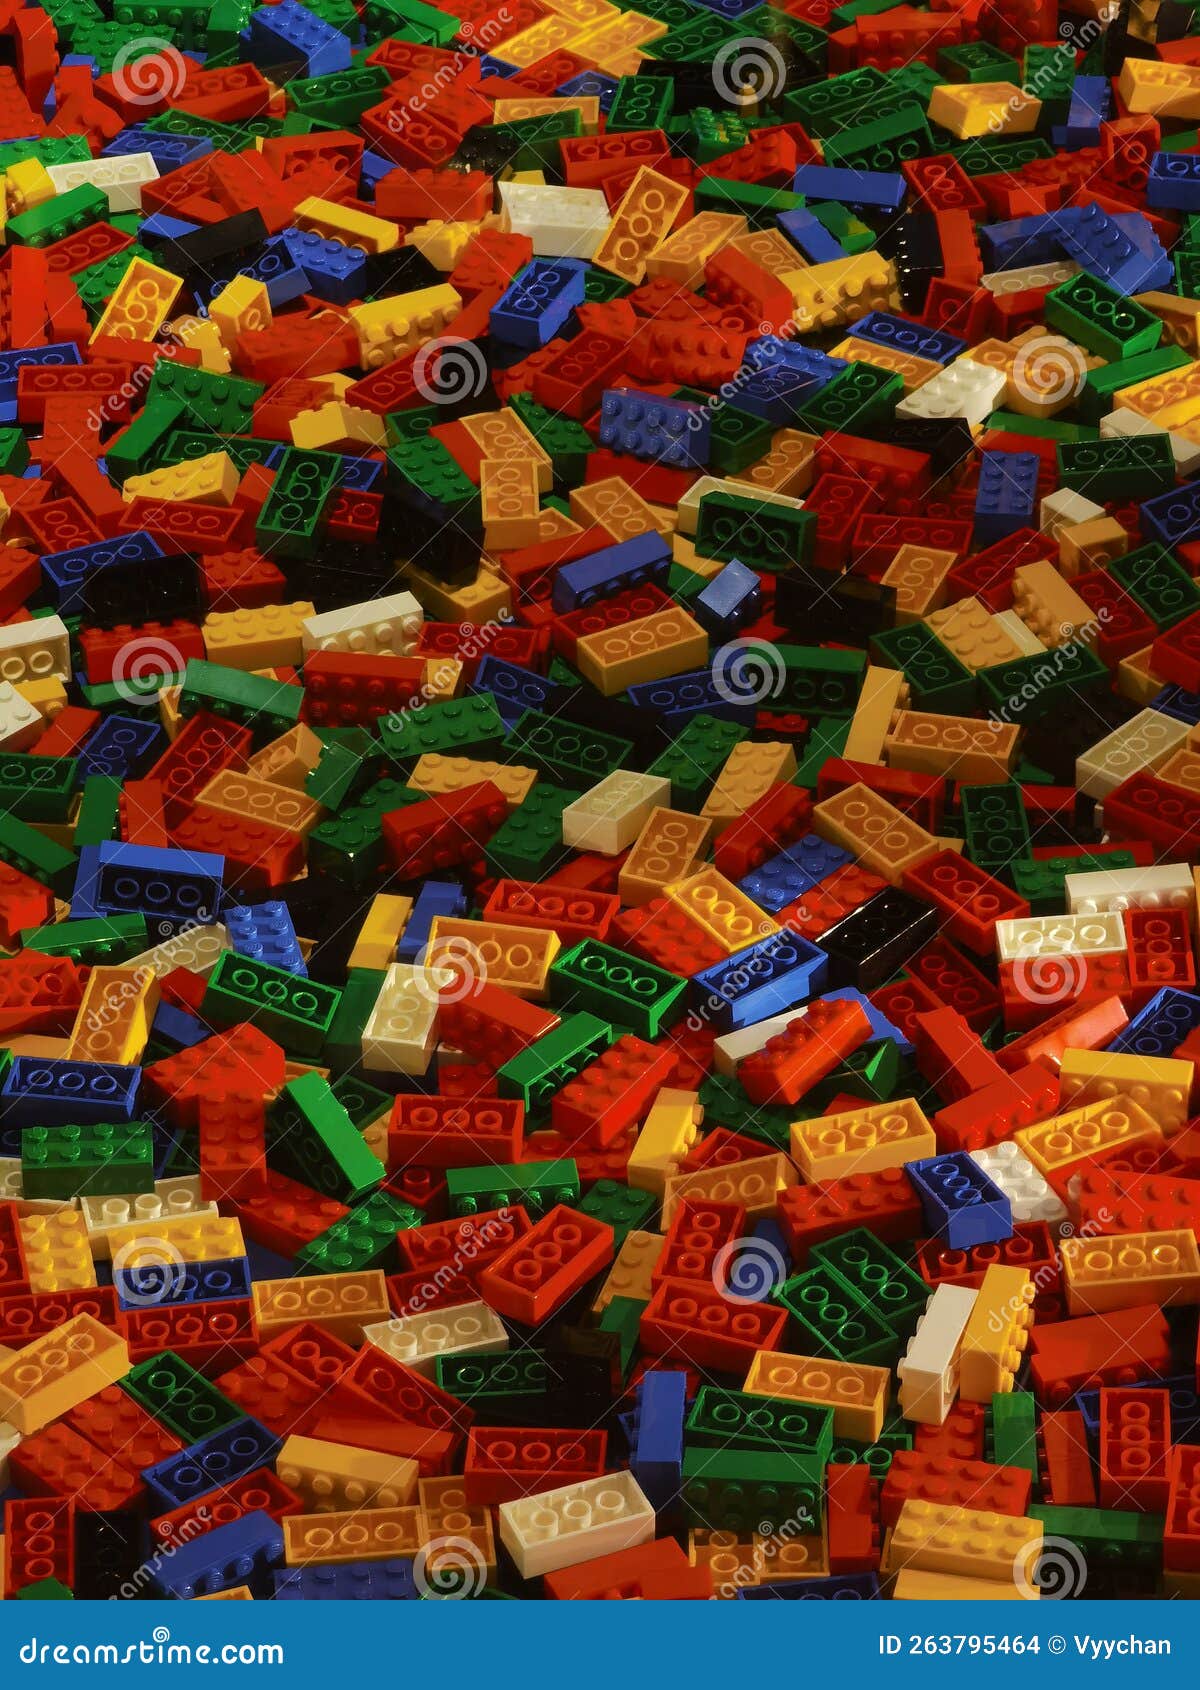 Portuguese Macau Galaxy Resort LV Louis Vuitton Colorful Lego